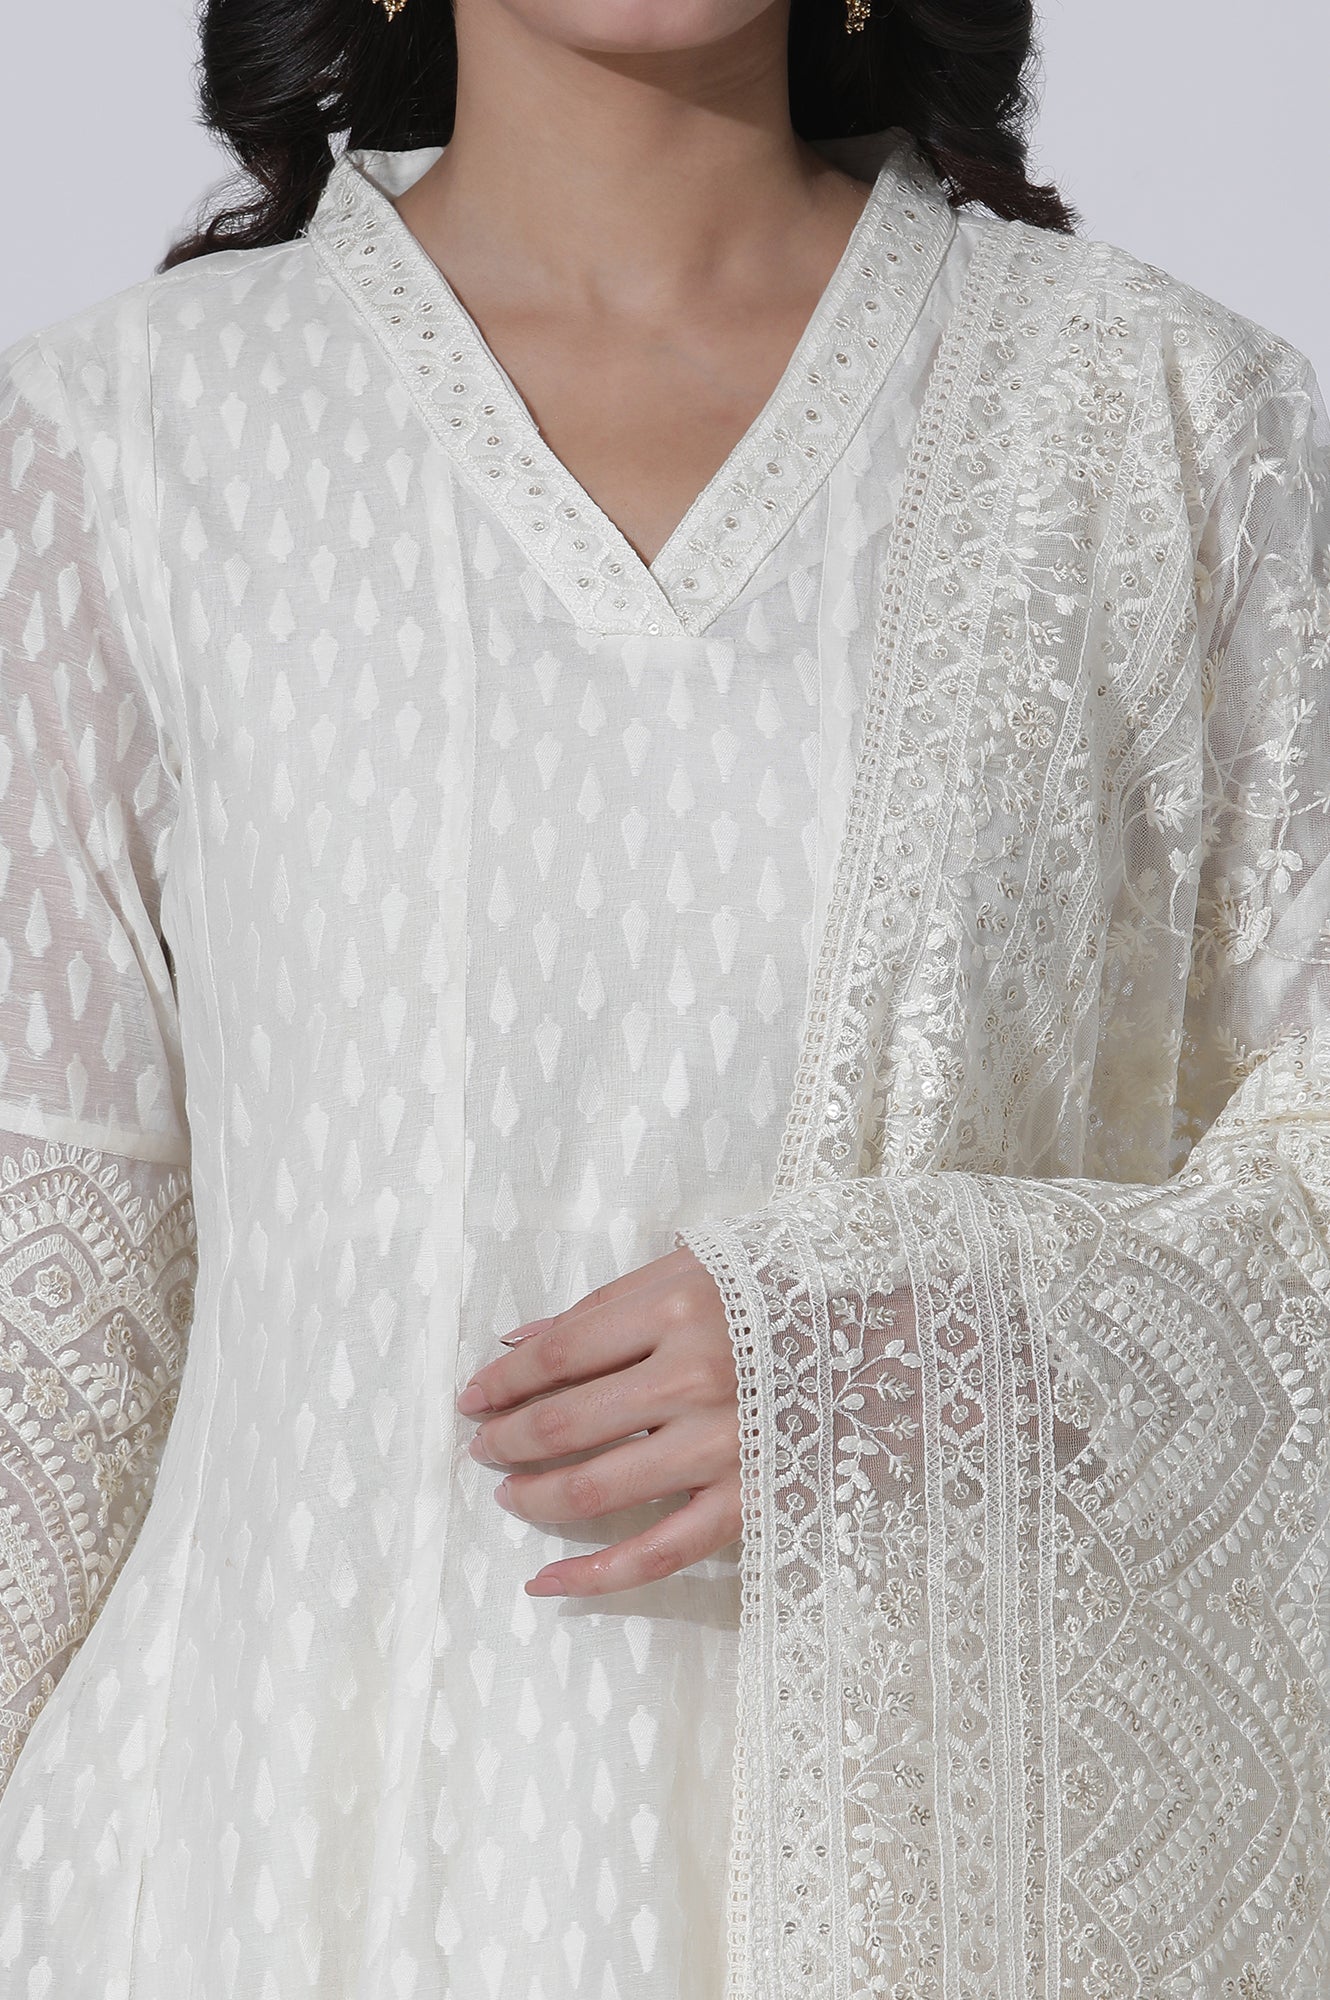 Off-White Cotton Blend Anarkali Embroidered Kurta, Straight Pants and Dupatta Set - wforwoman